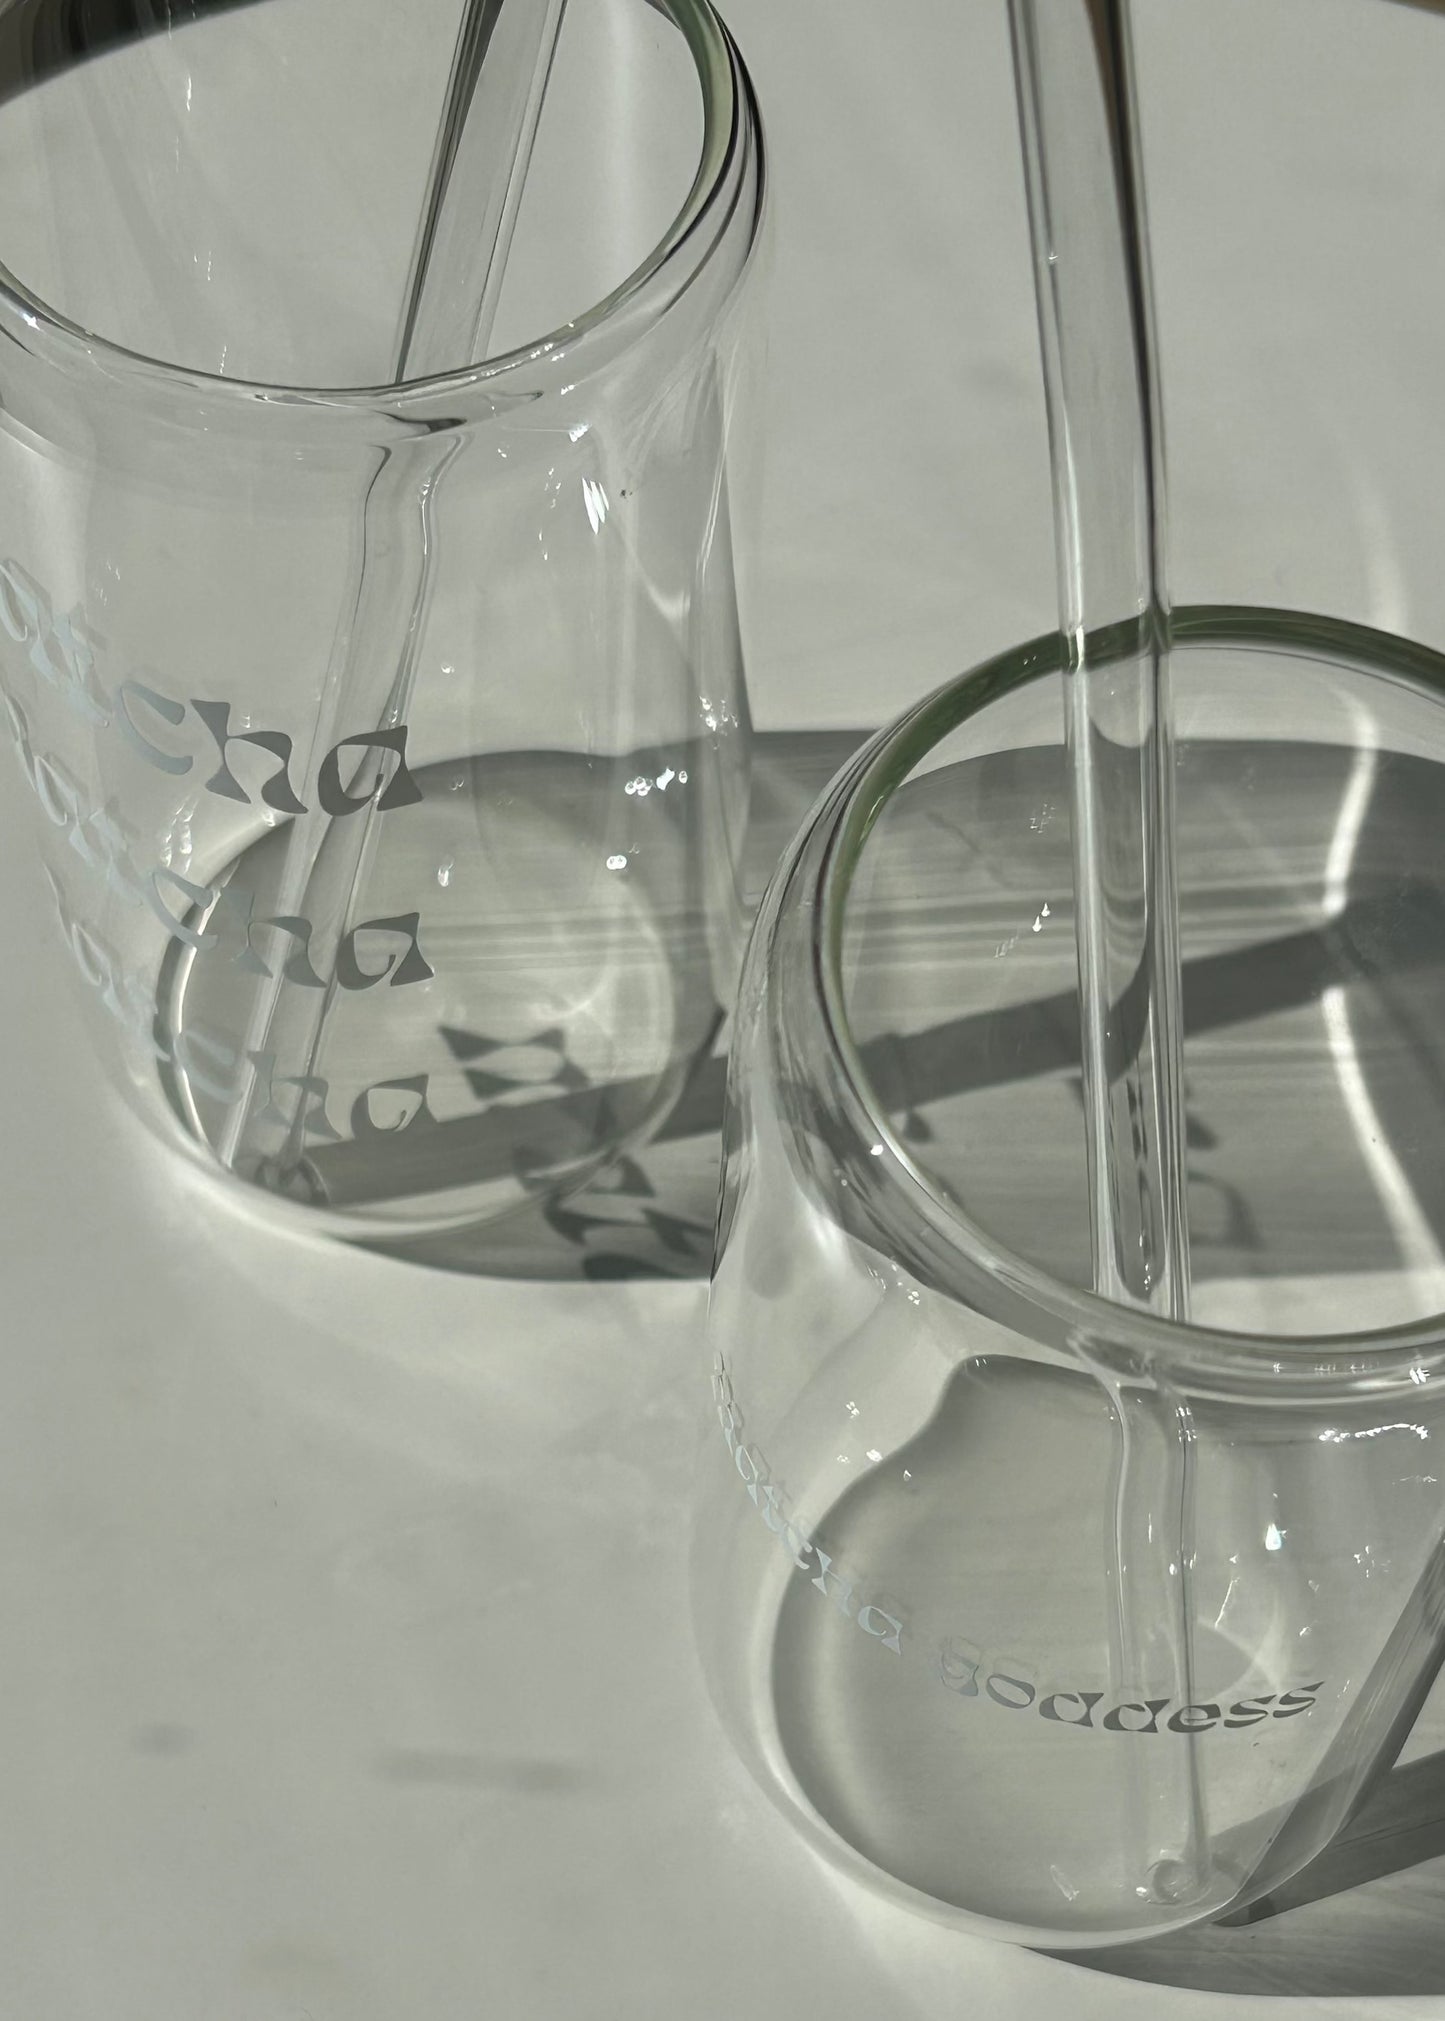 Matcha glass set incl. glass straws- limited edition